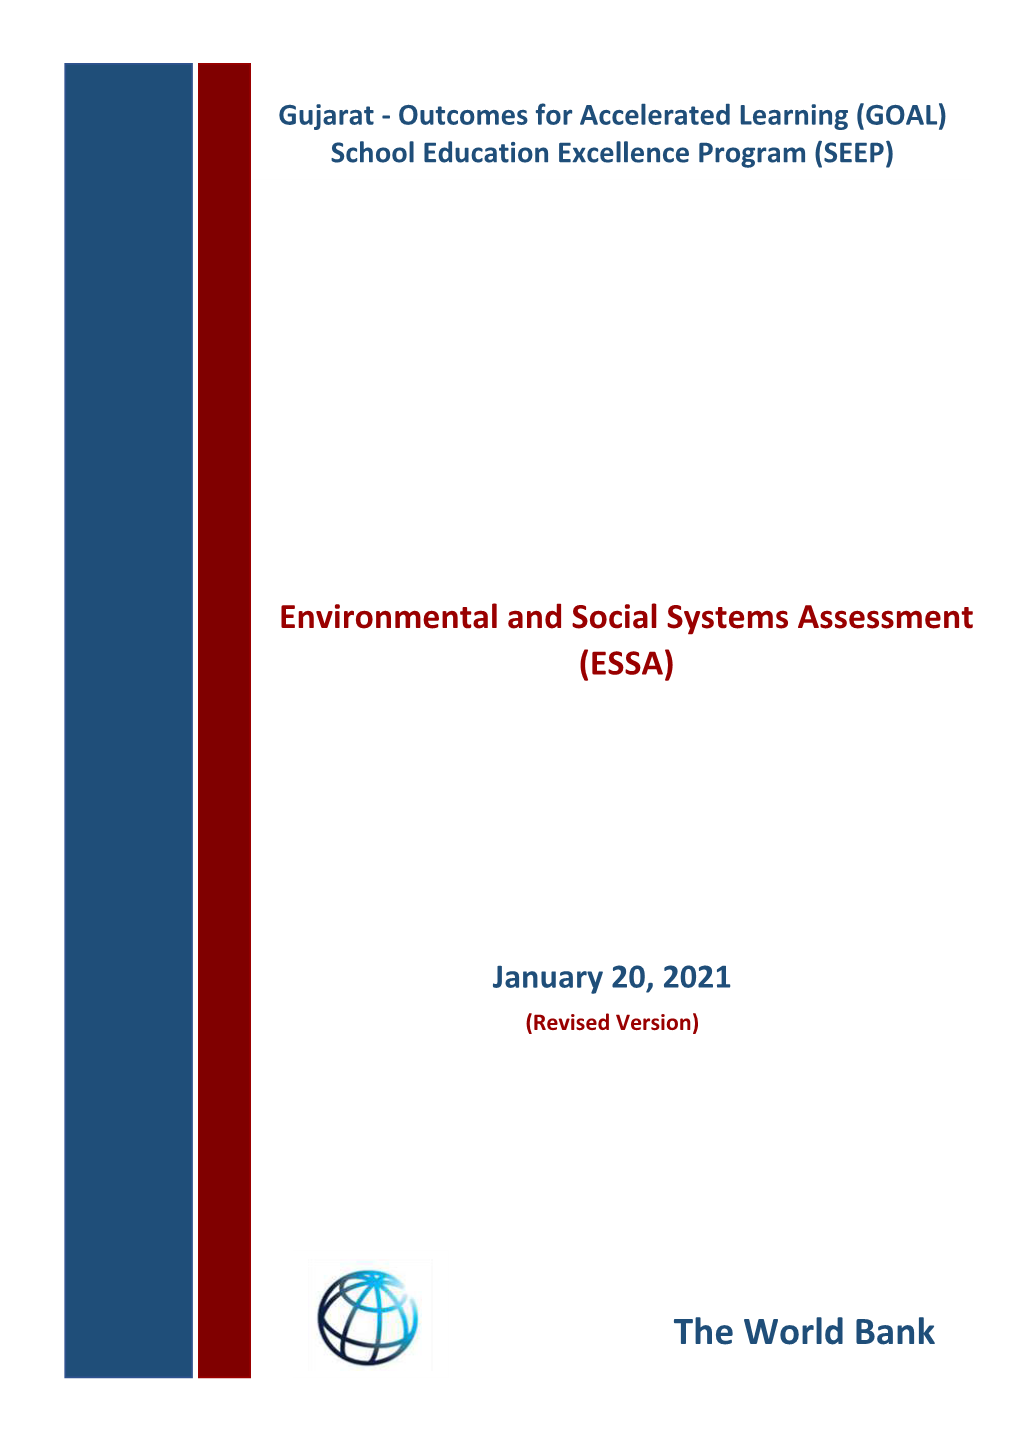 Gujarat-GOAL-SEEP-ESSA-Environmental and Social Systems Assessment